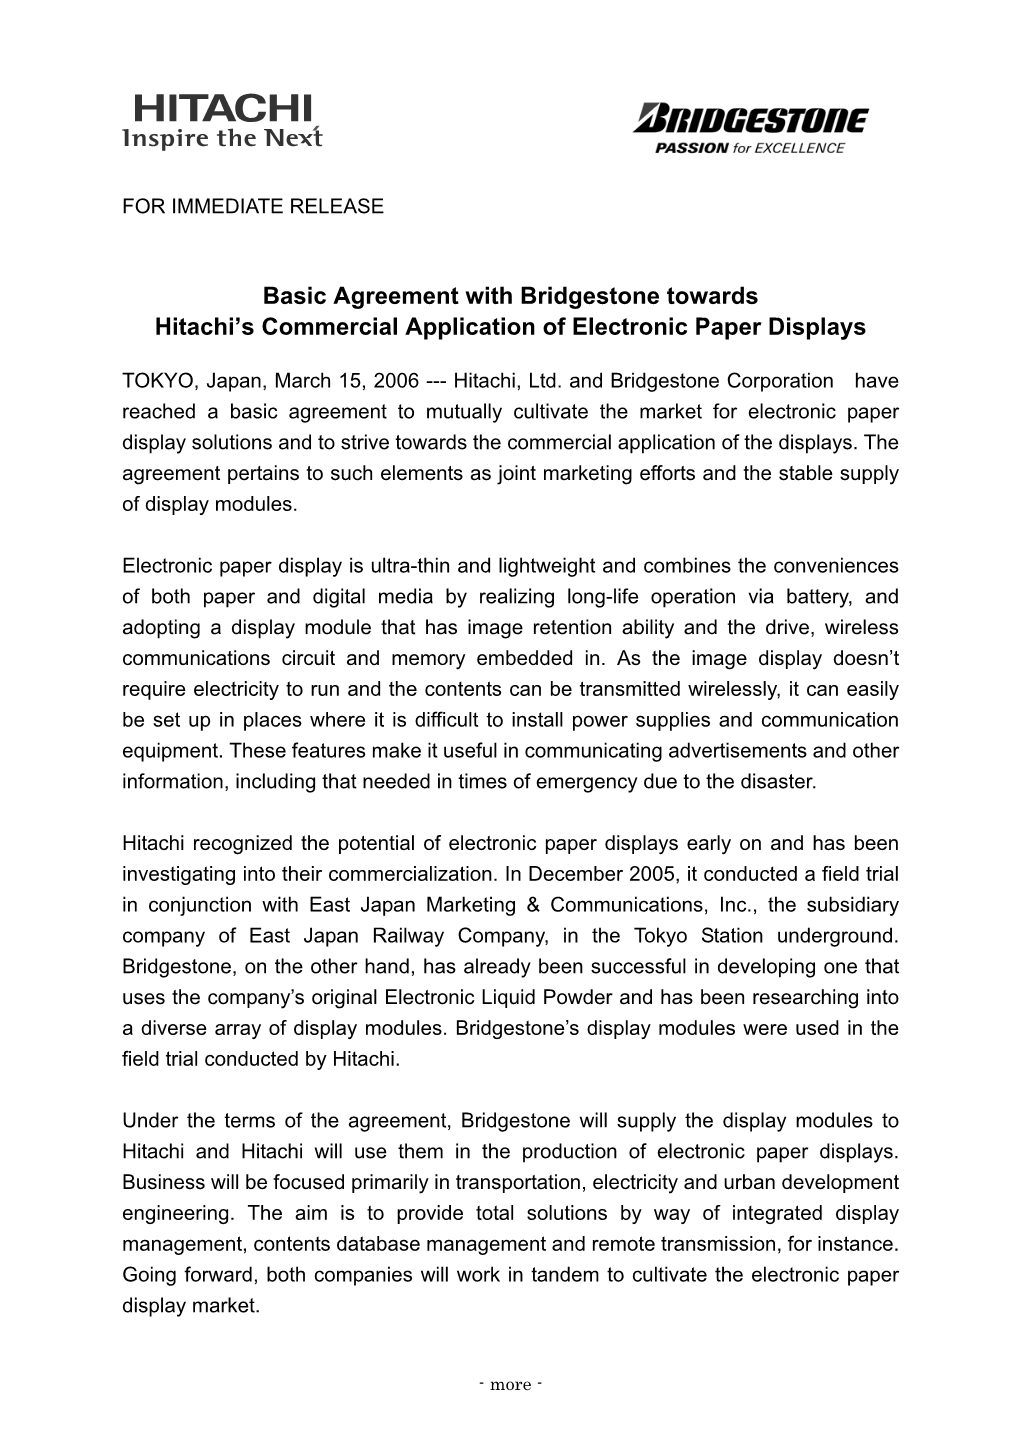 Basic Agreement with Bridgestone Towards Hitachi's Commercial